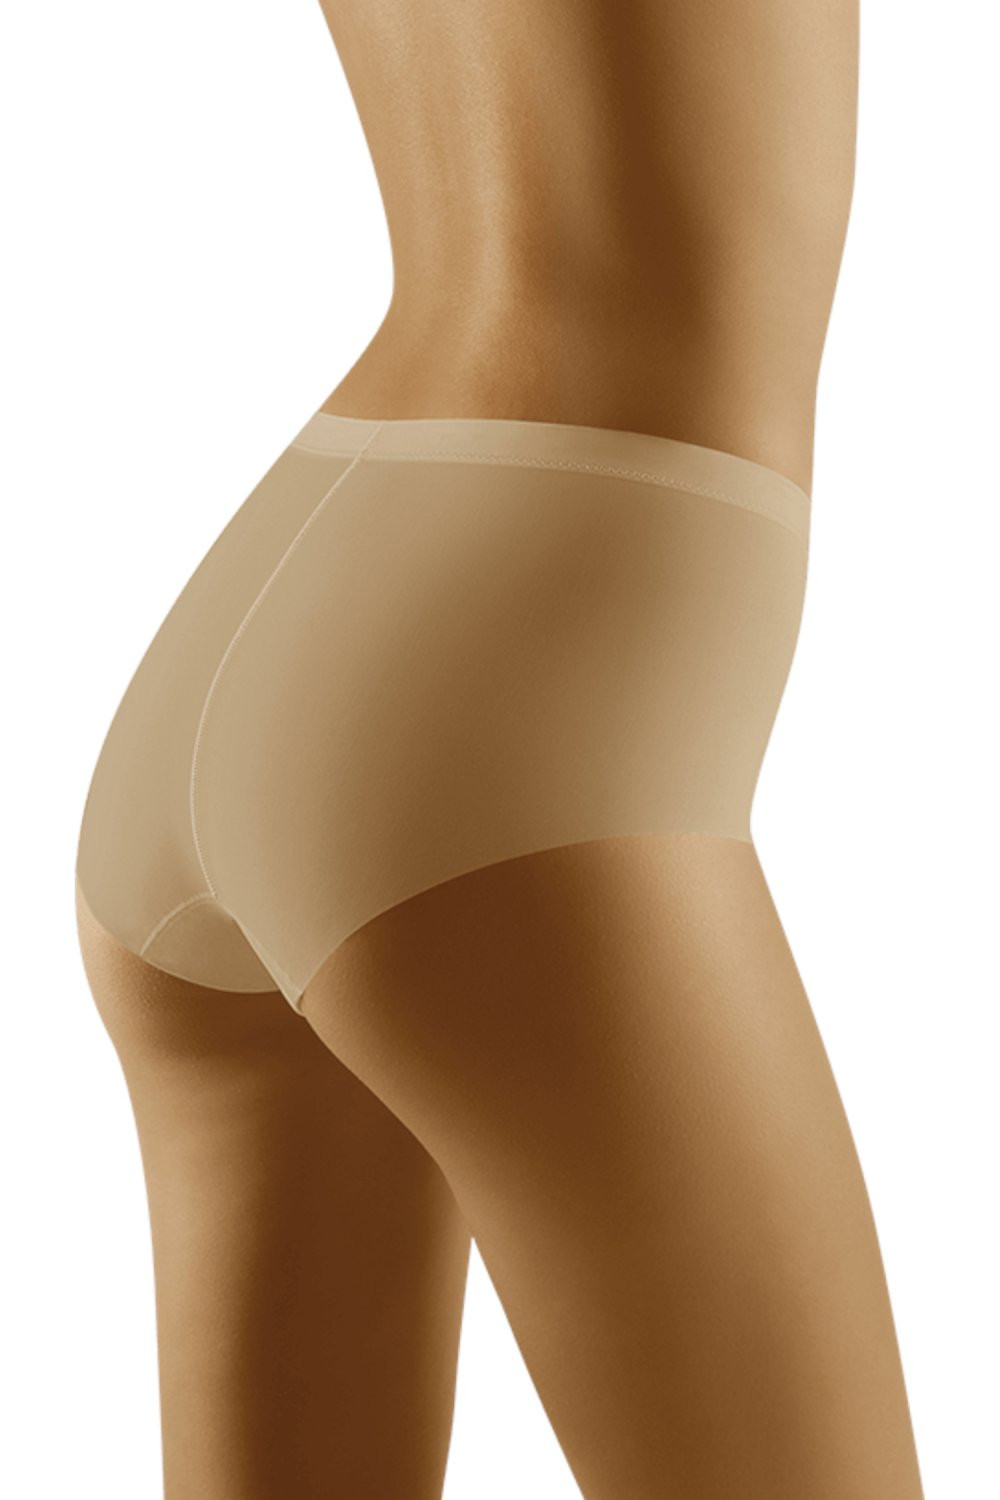 Stahovací kalhotky Minima beige - WOLBAR Béžová XL